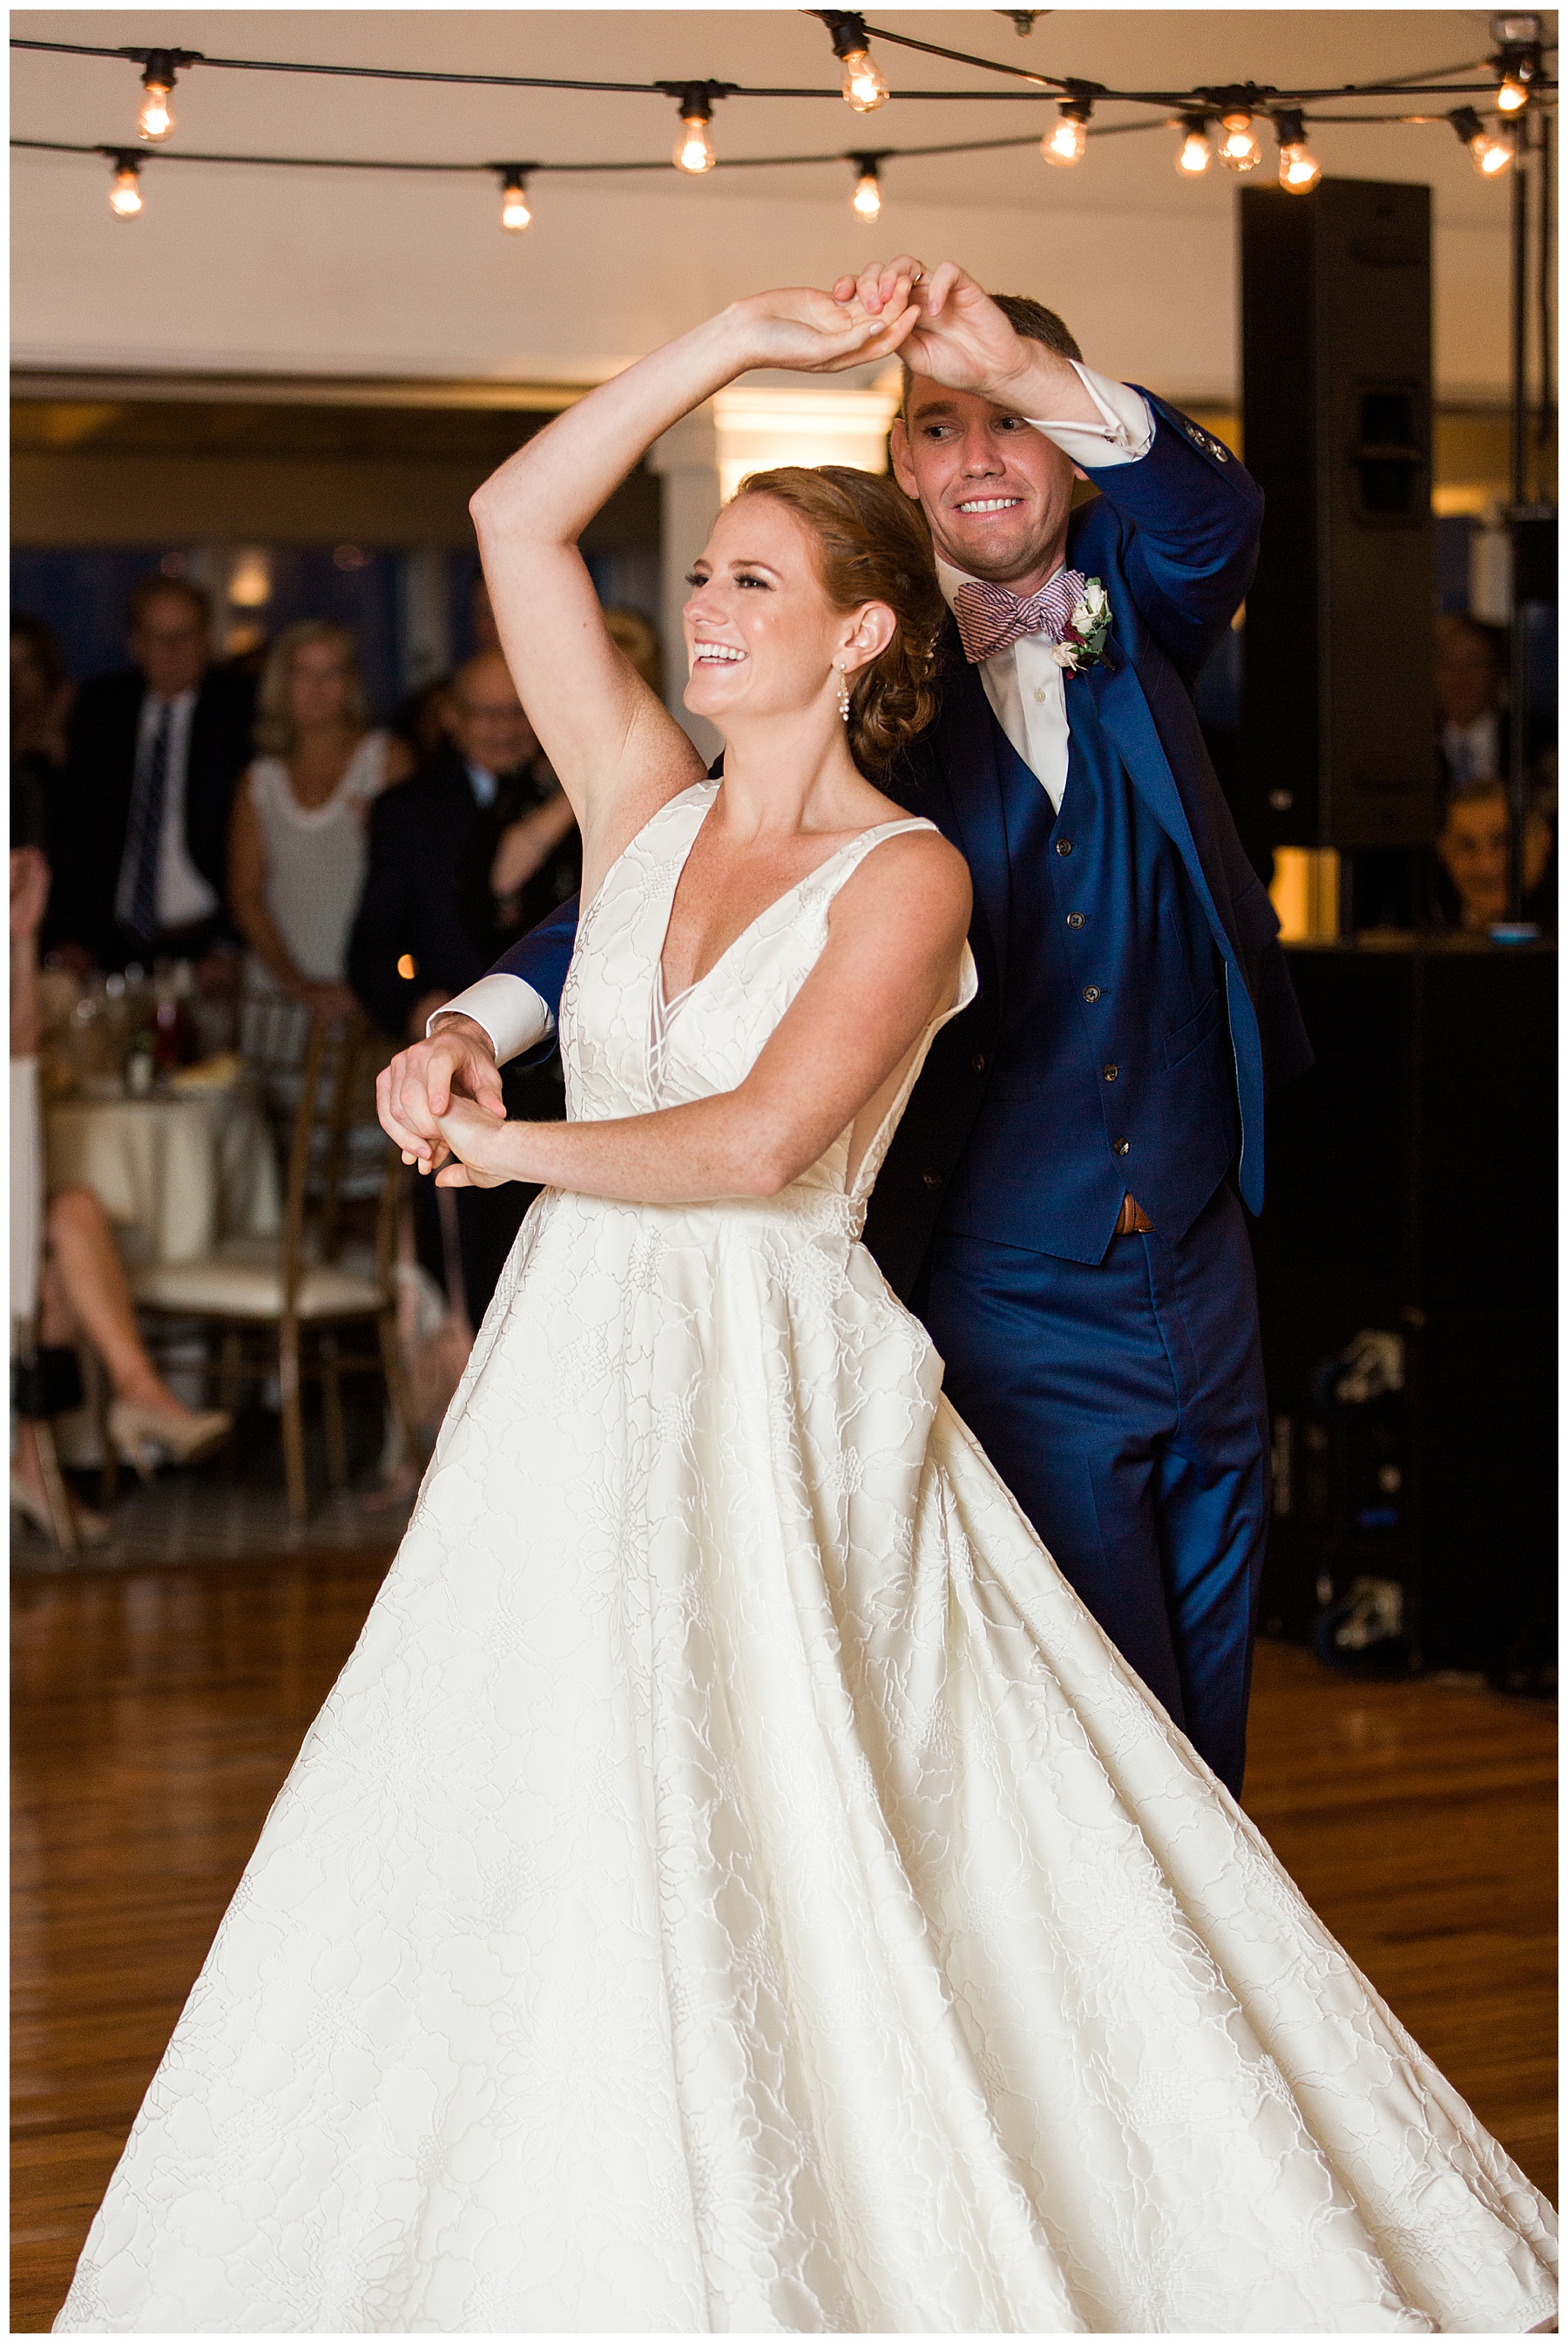 Bride-And-Groom-First-Dance-New-York.jpg